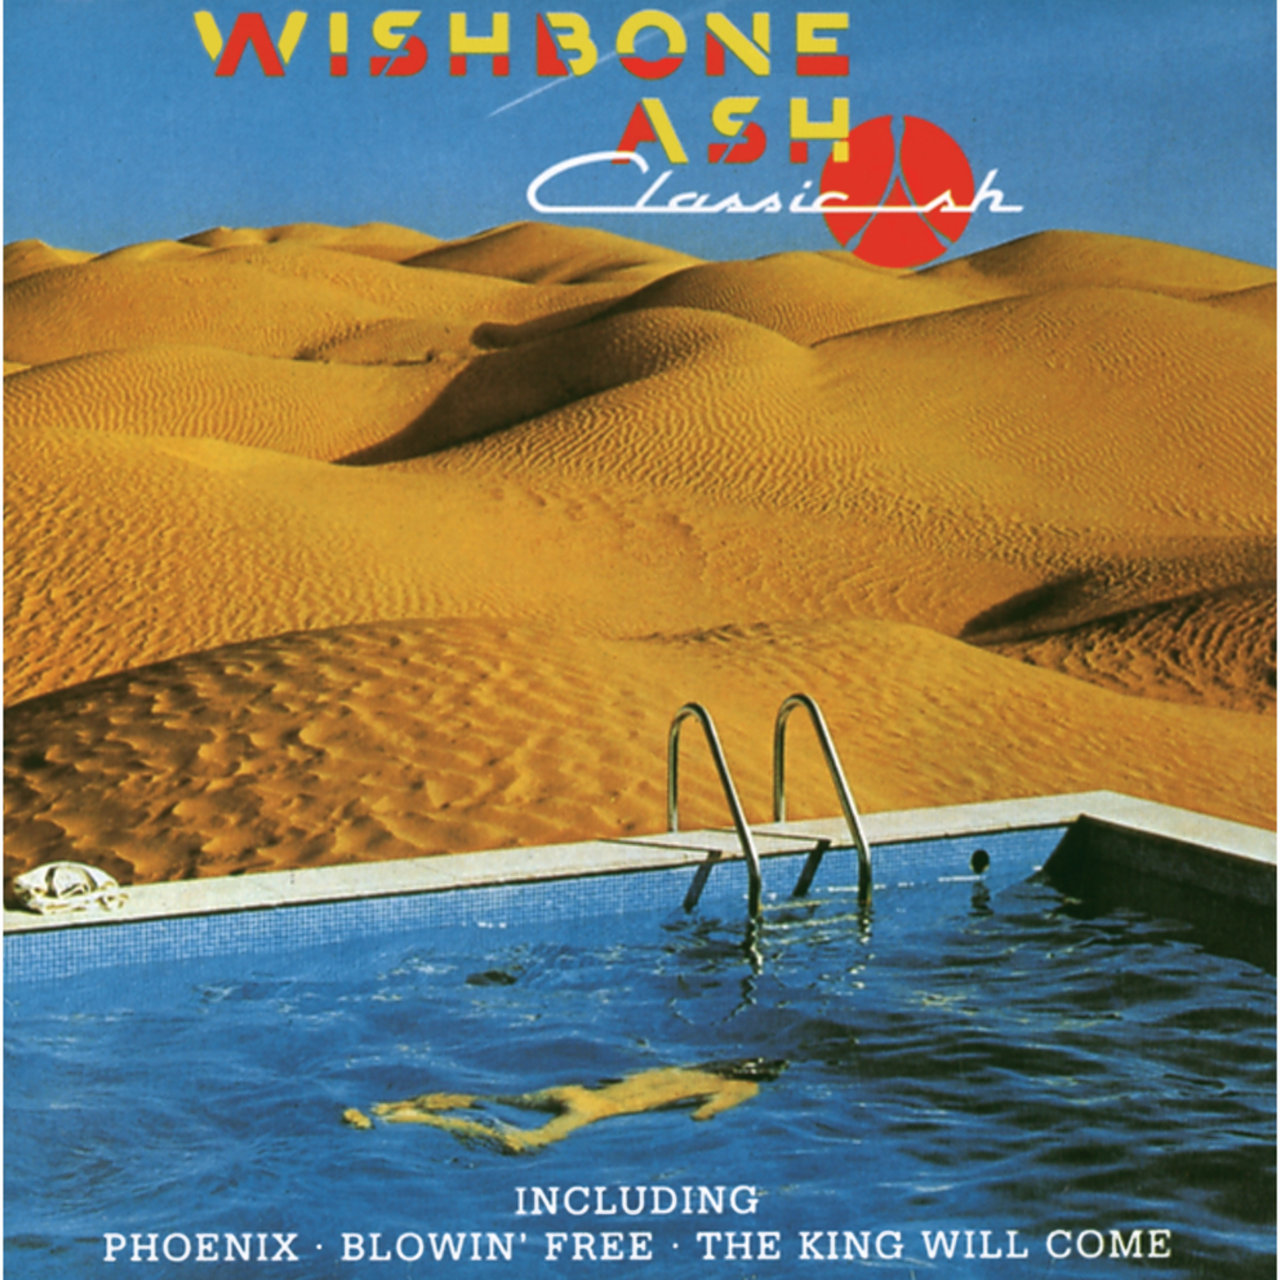 Wishbone Ash - Classic Ash [1977]